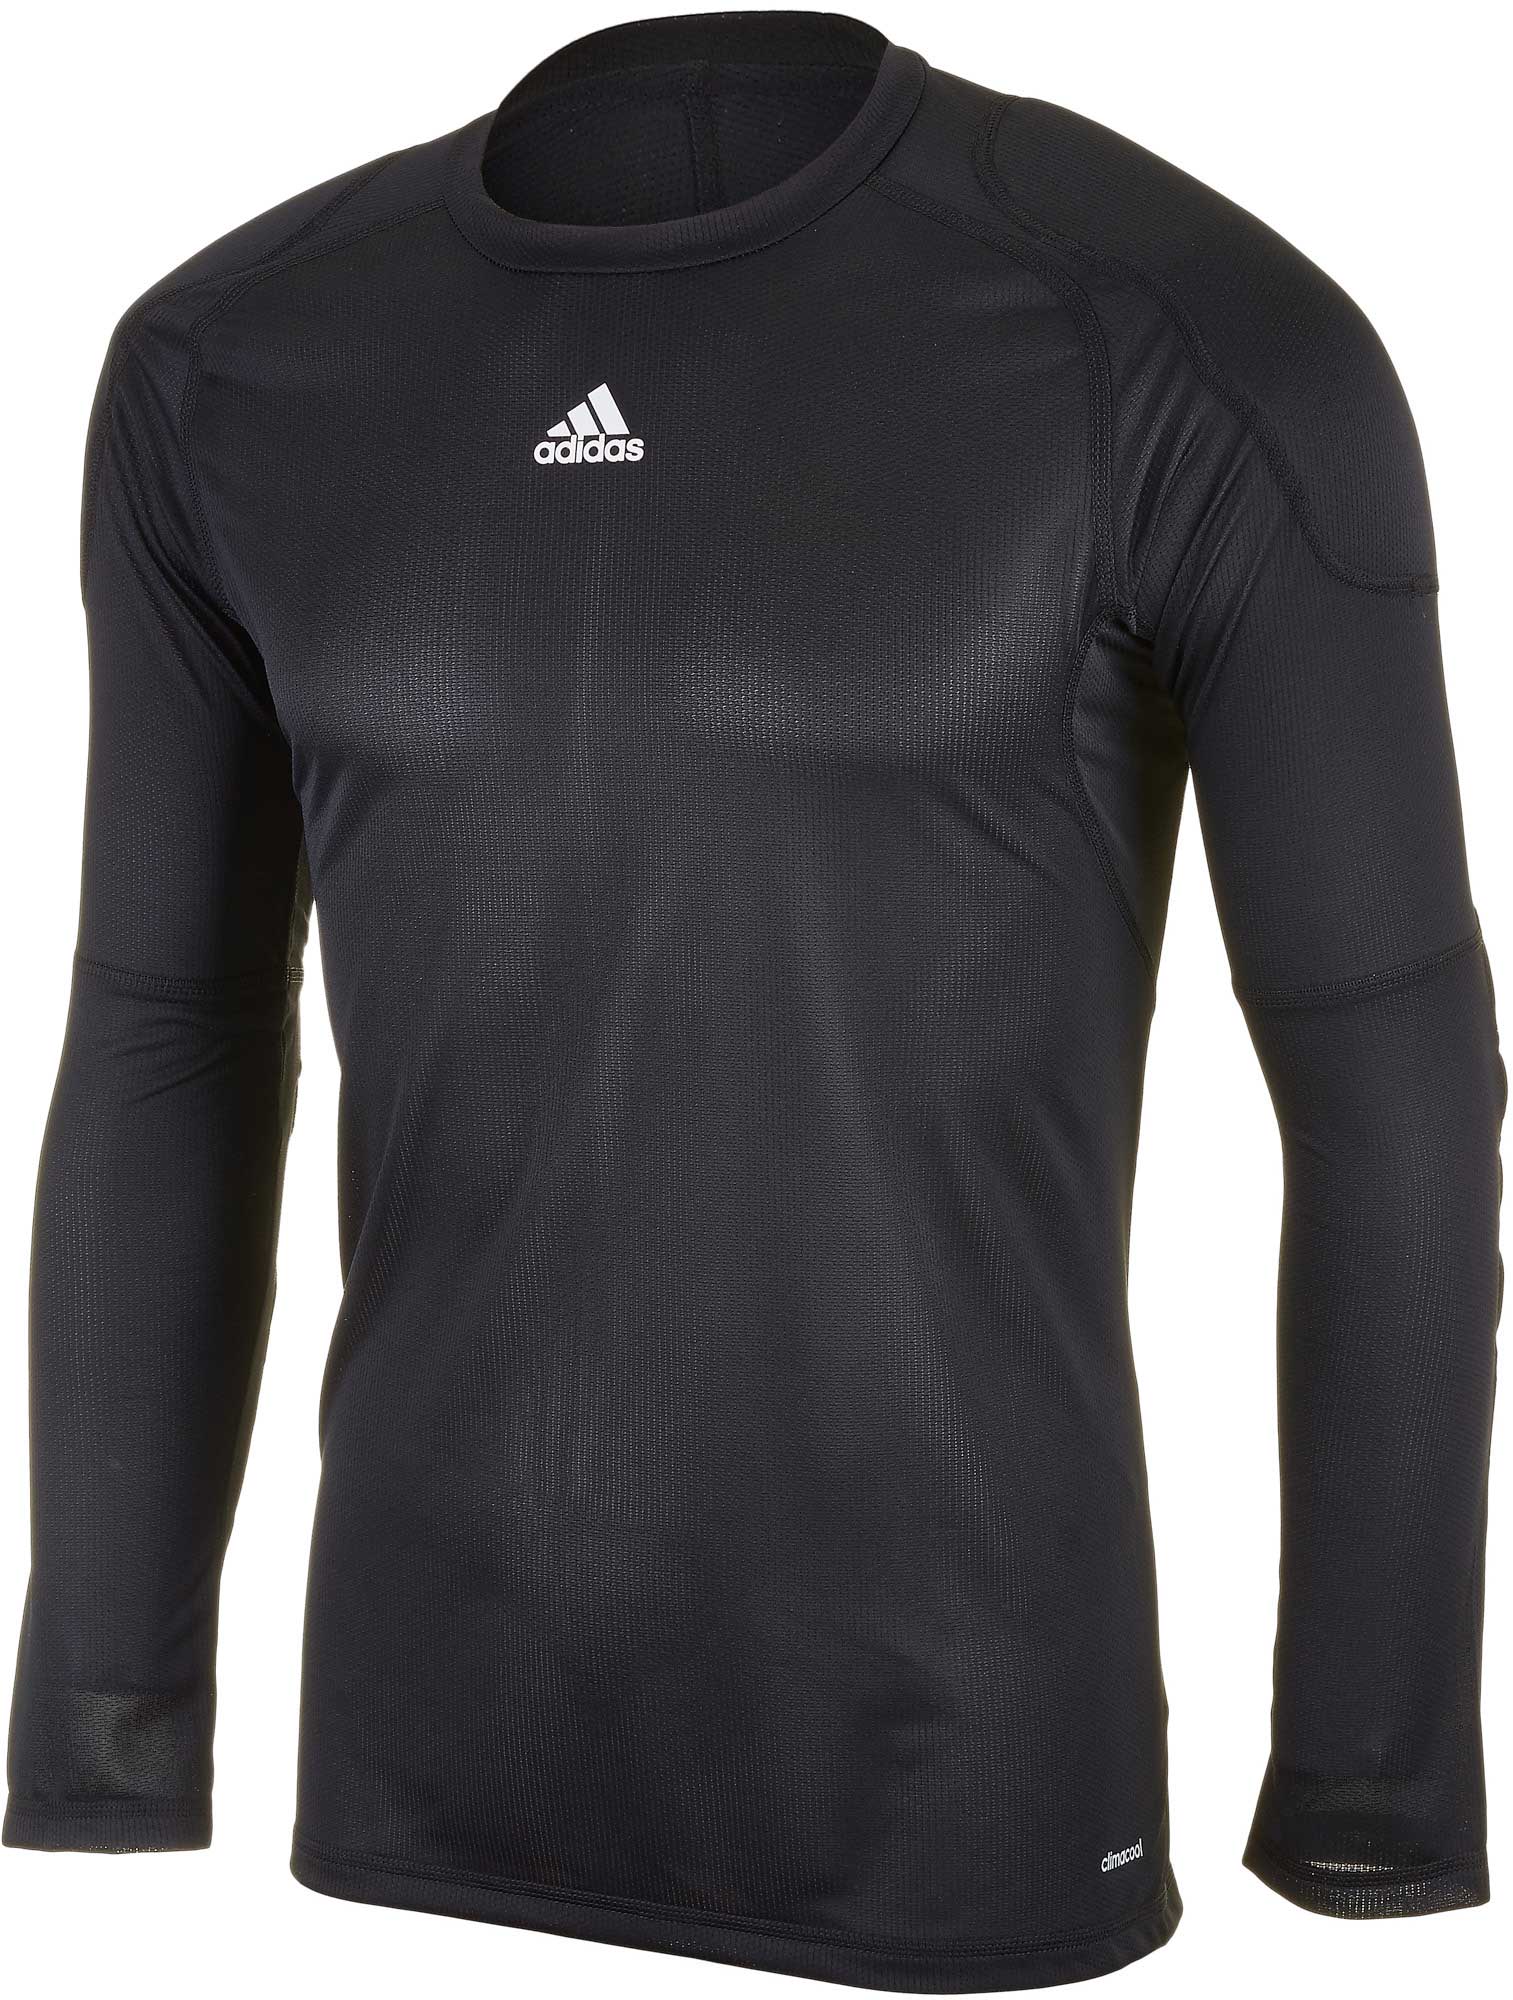 adidas Goalkeeper Undershirt Black